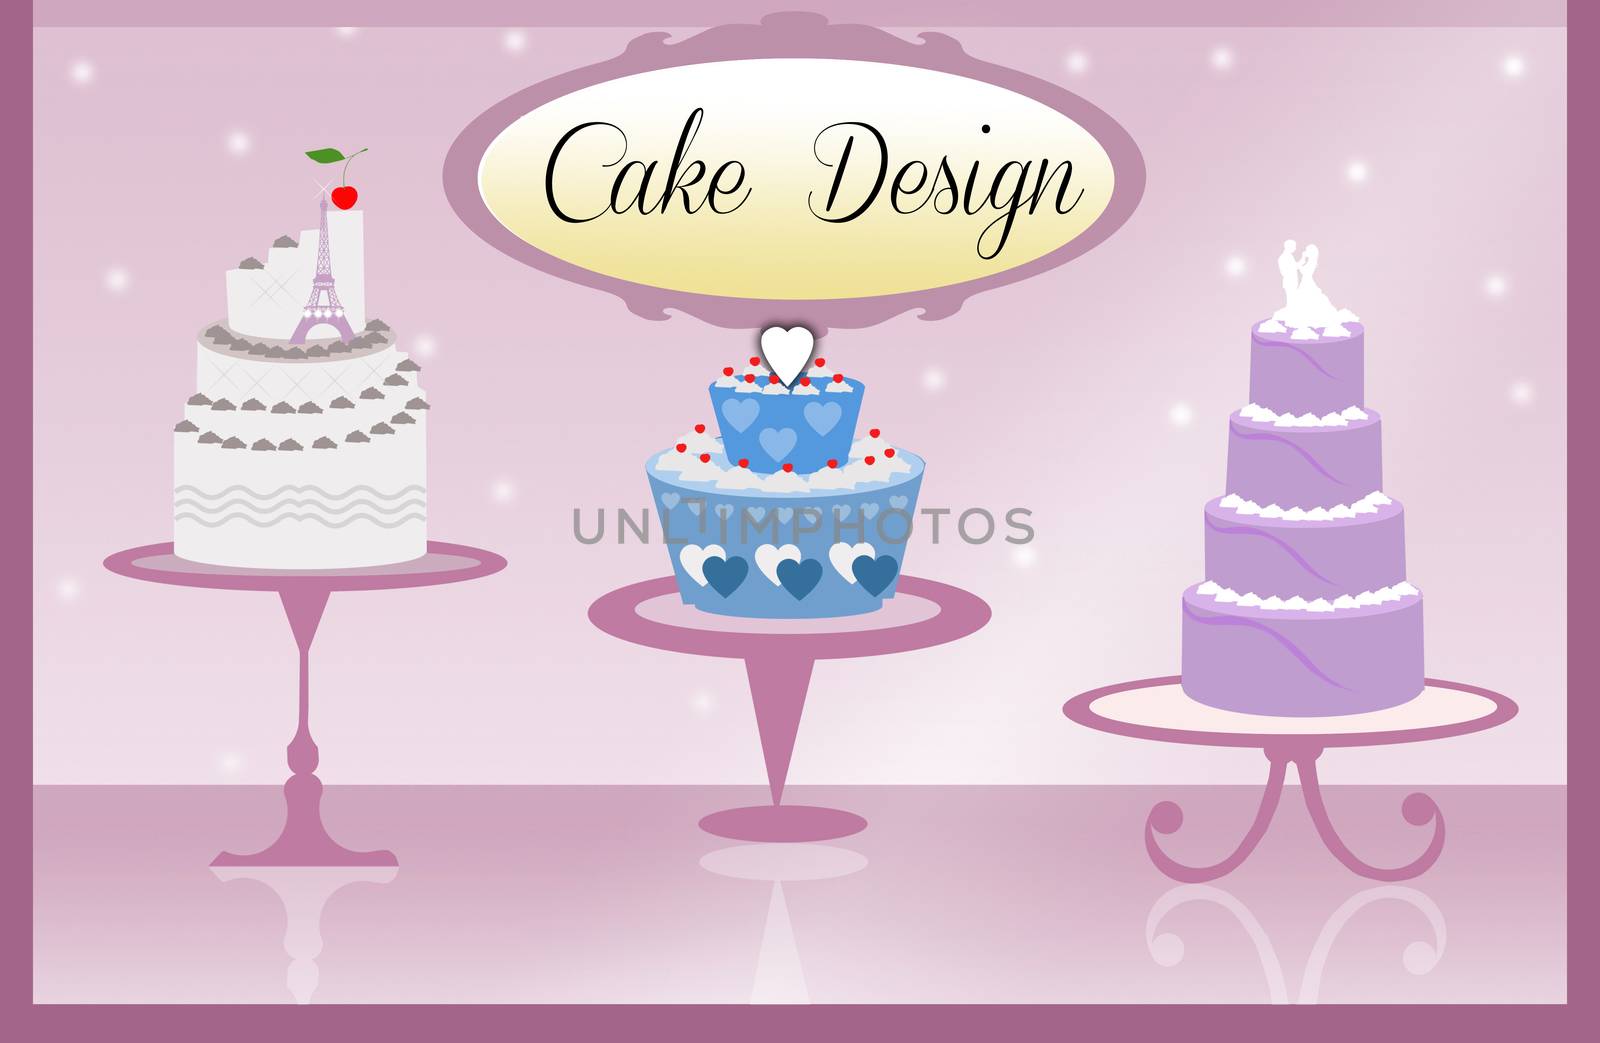 Cake design by adrenalina